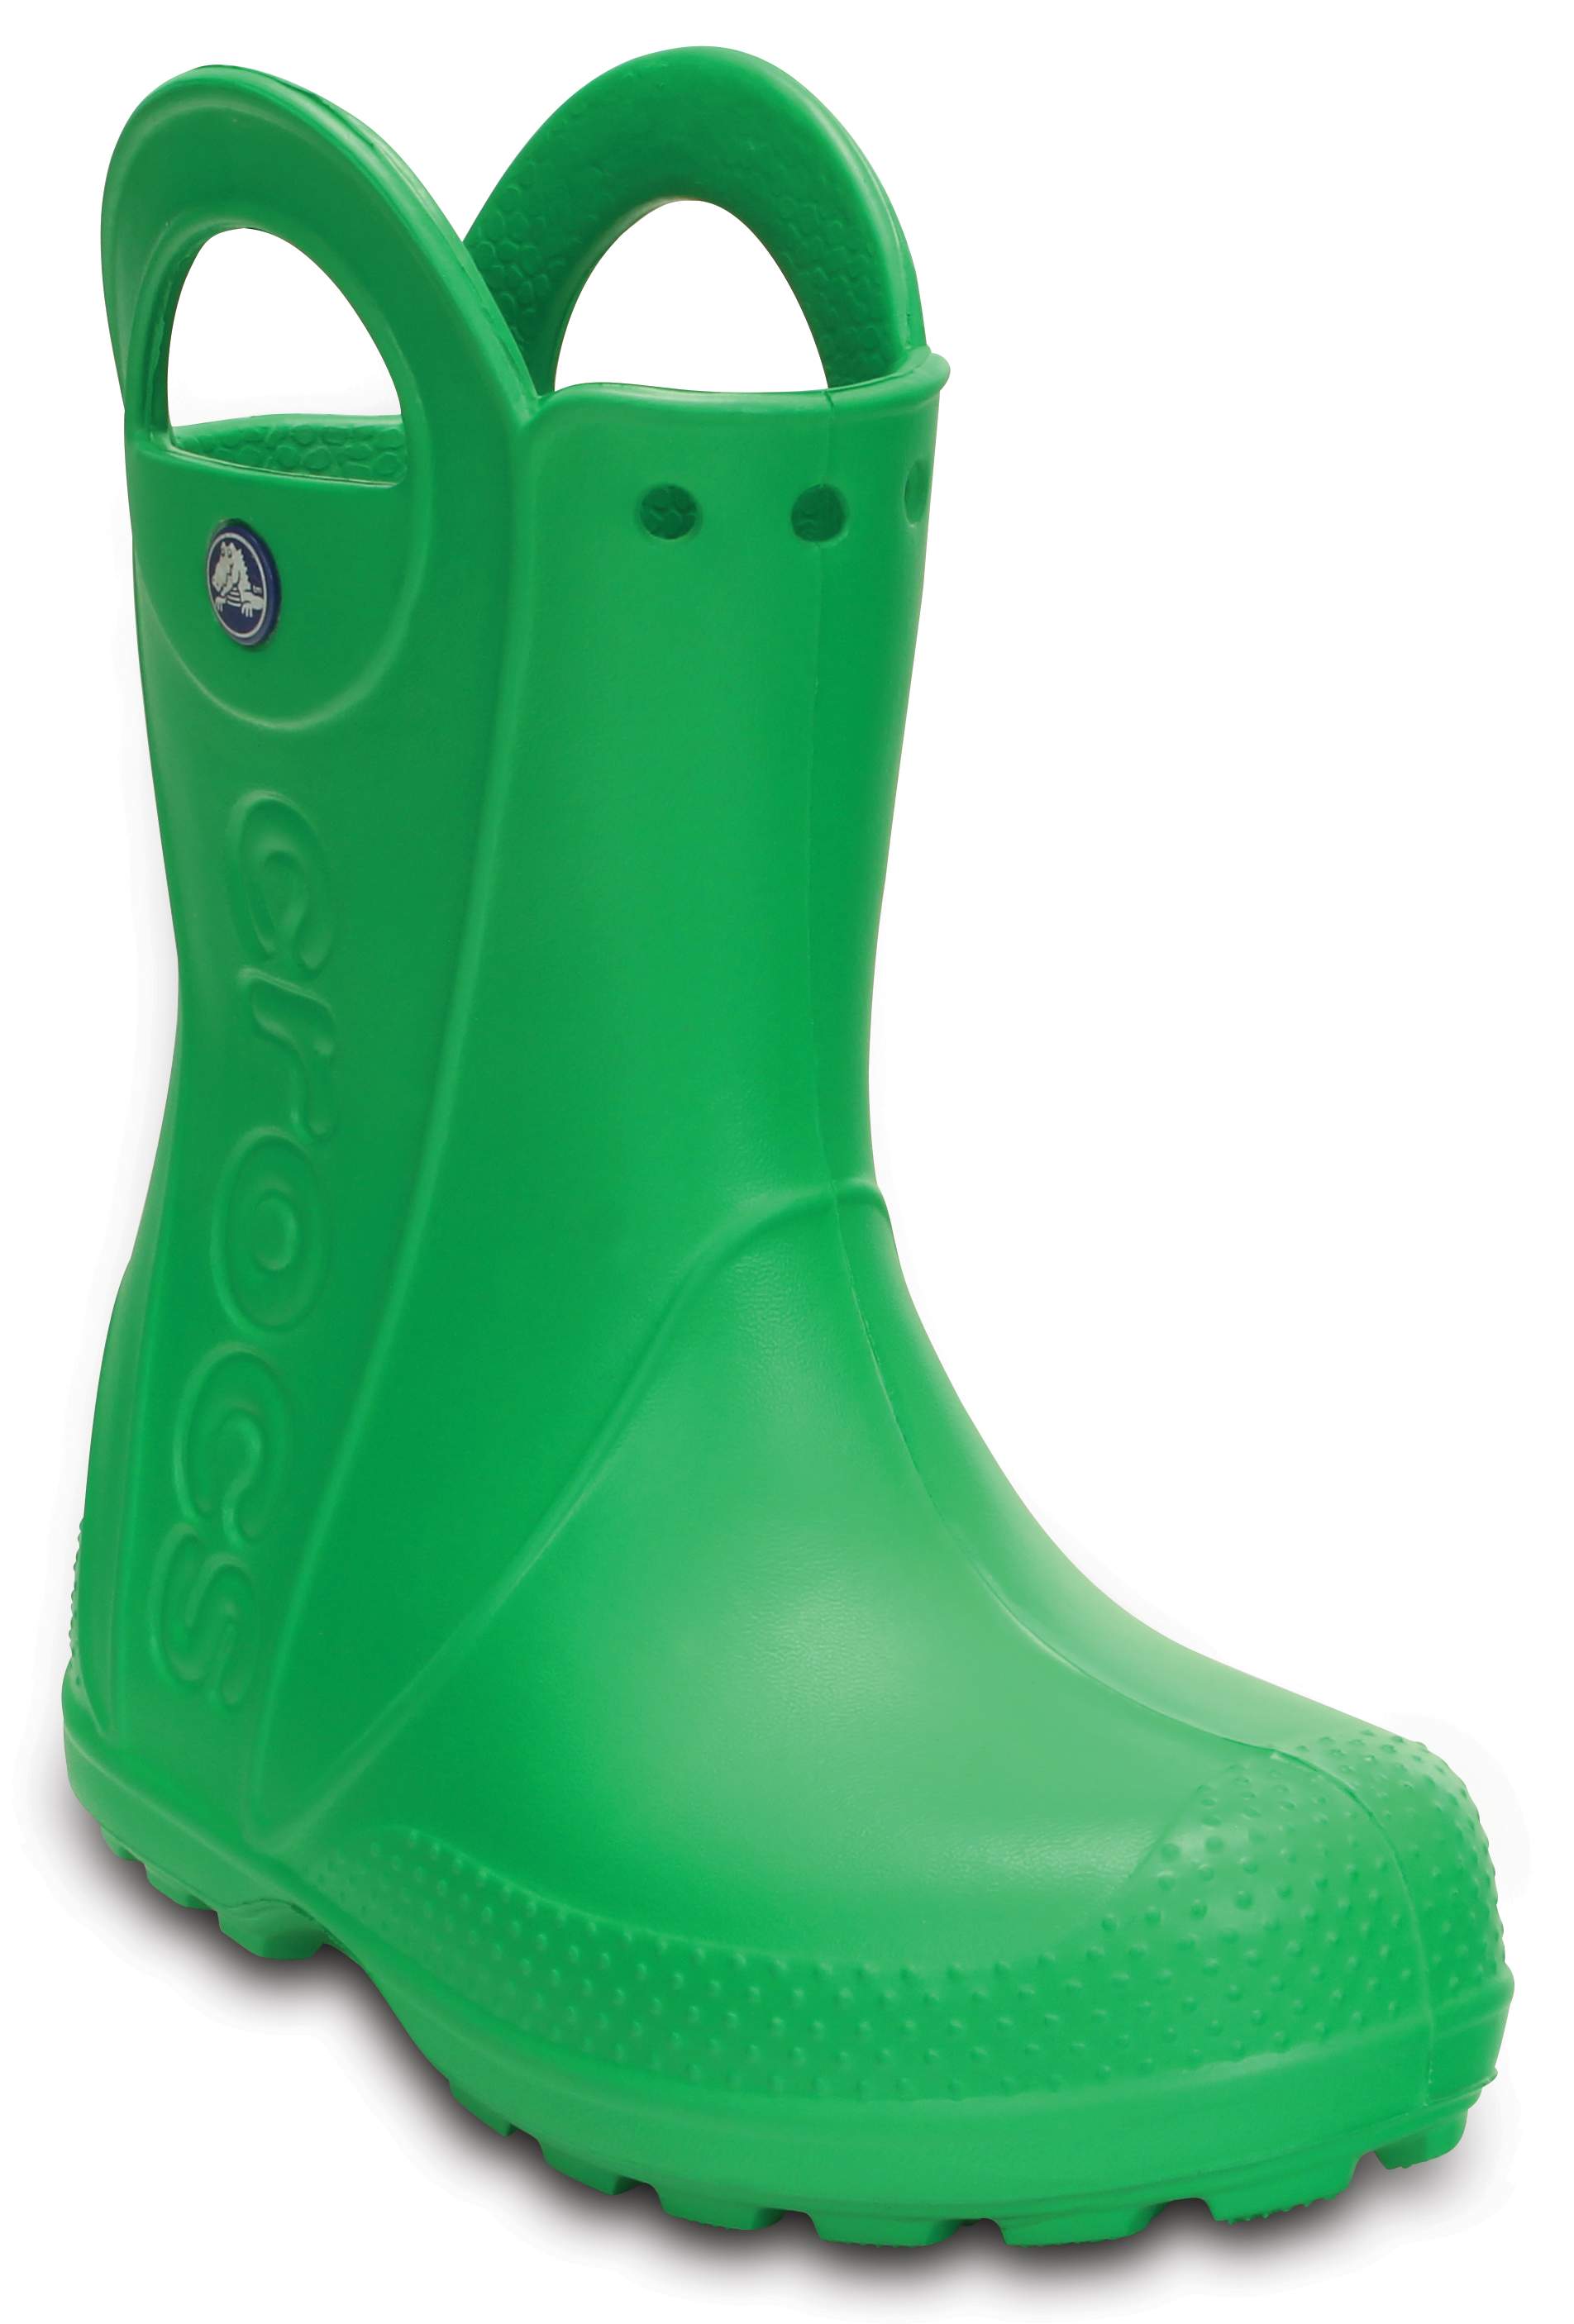 croc kids boots